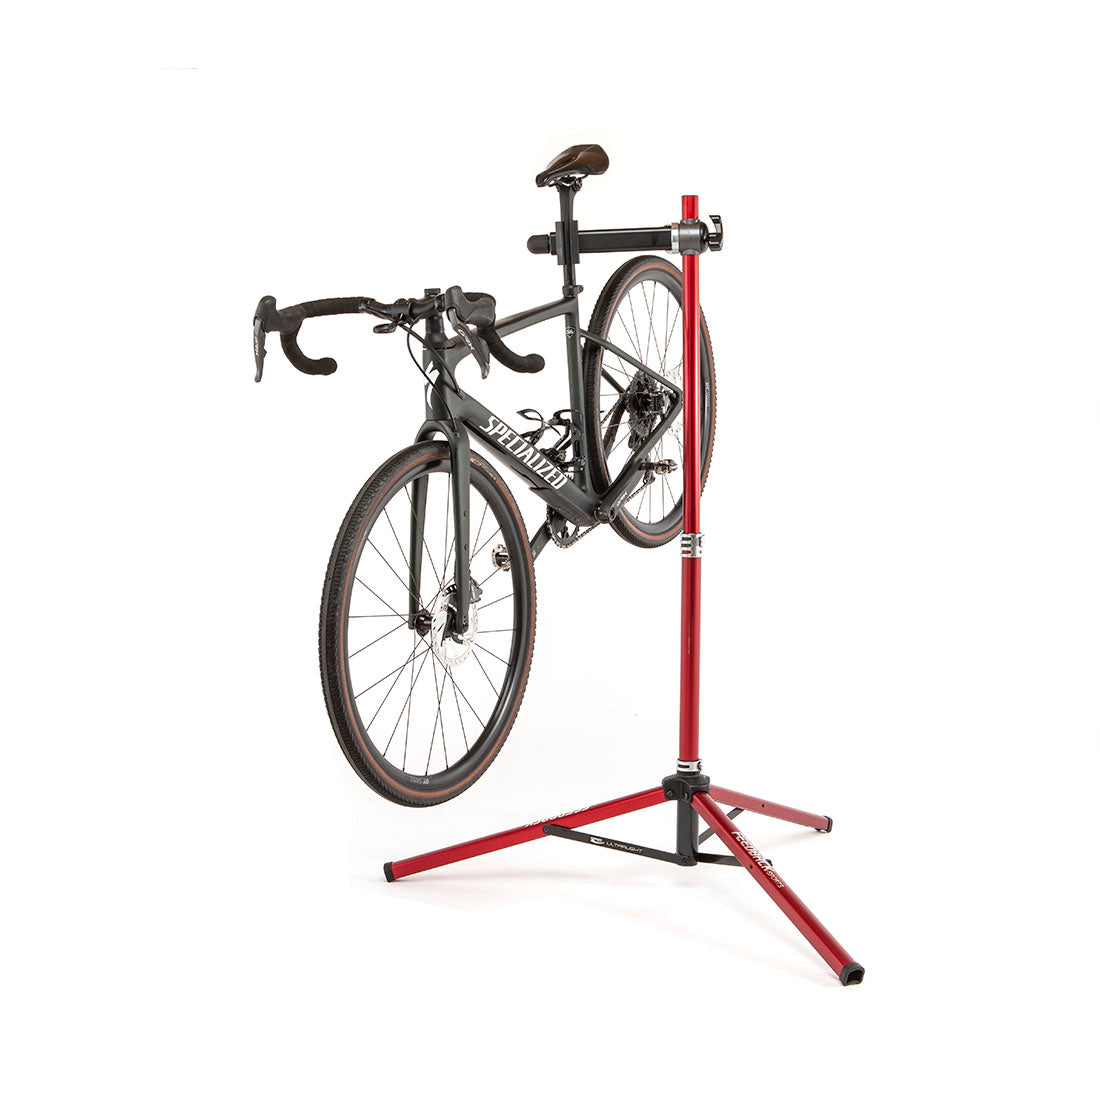 Feedback Sports ultralight bike repair stand in studio on white with bike installed.